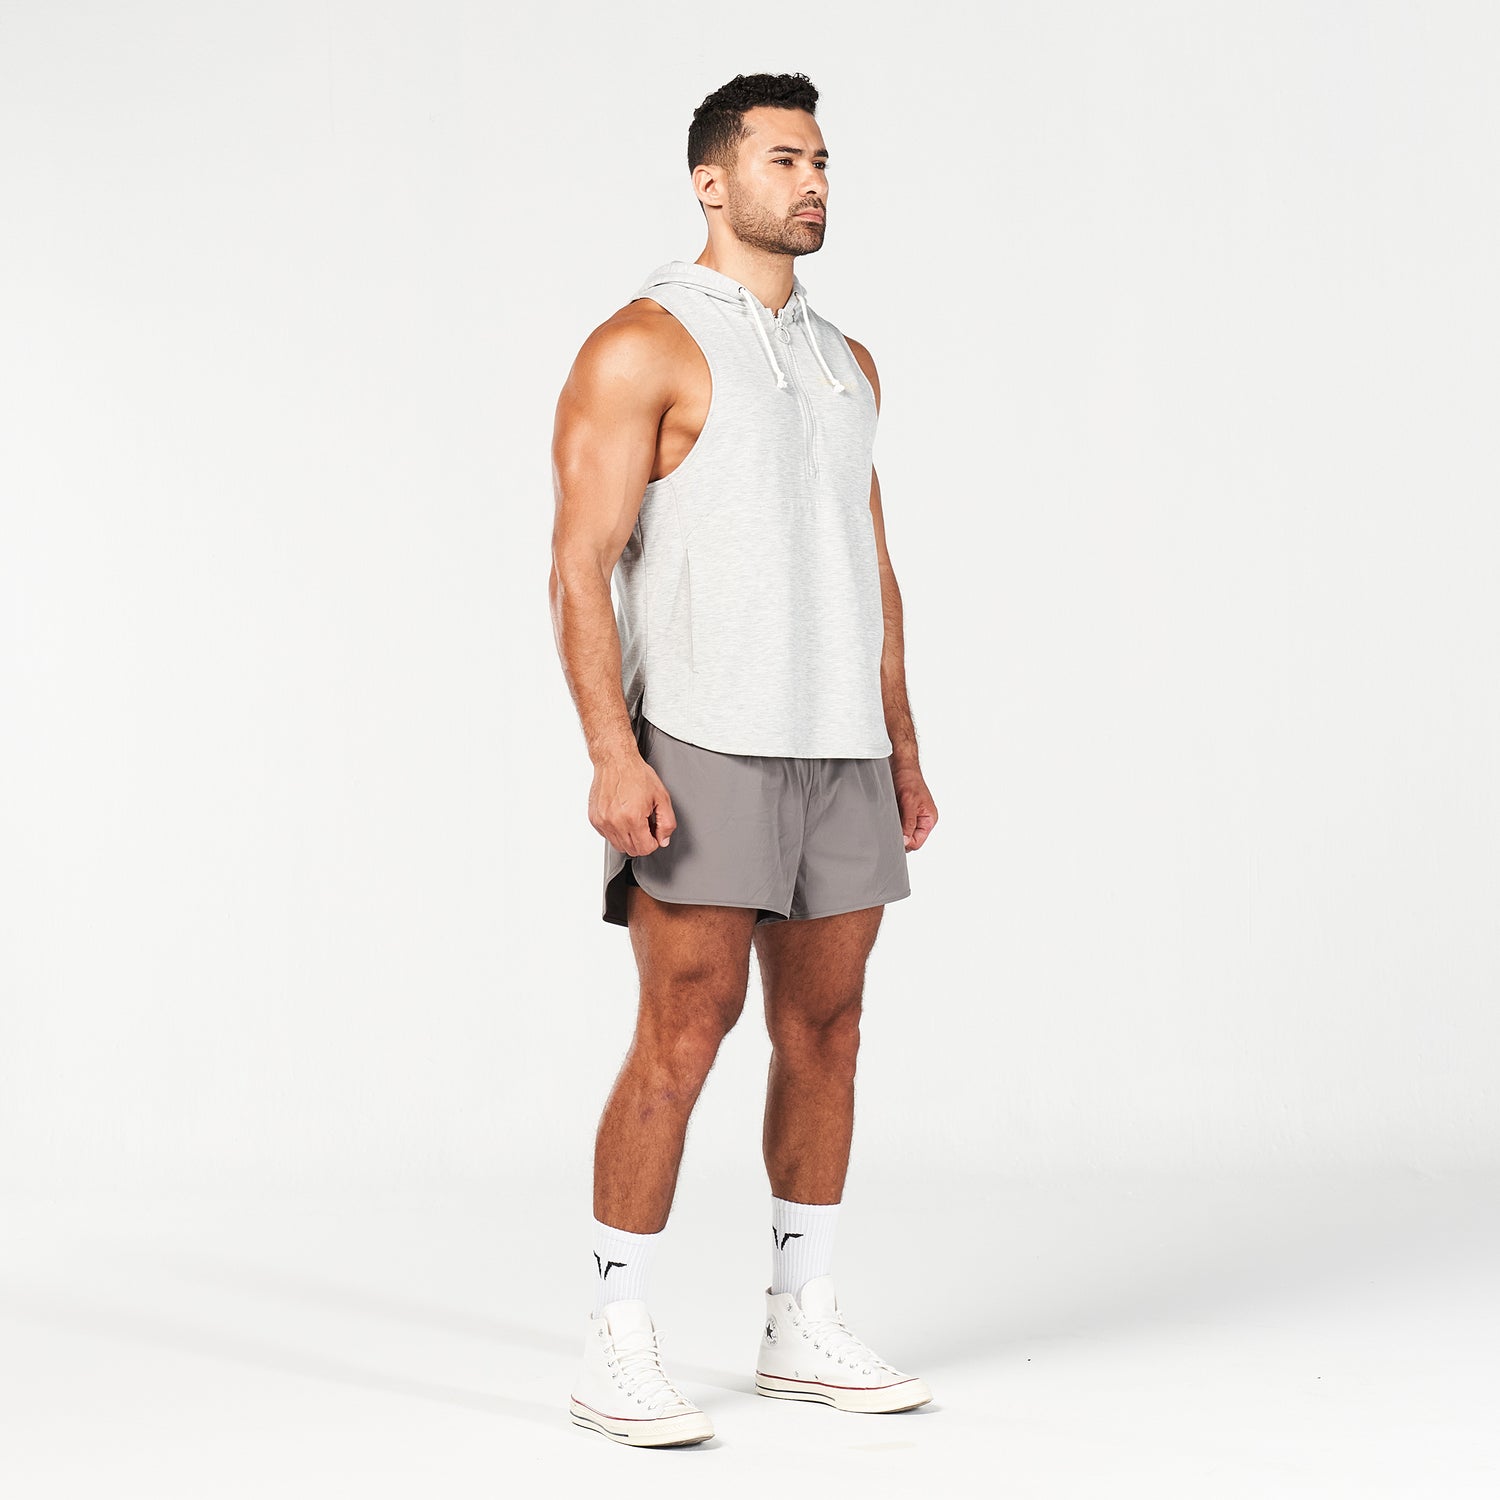 squatwolf-gym-wear-golden-era-new-school-hooded-tank-lt-grey-marl-workout-tank-tops-for-men